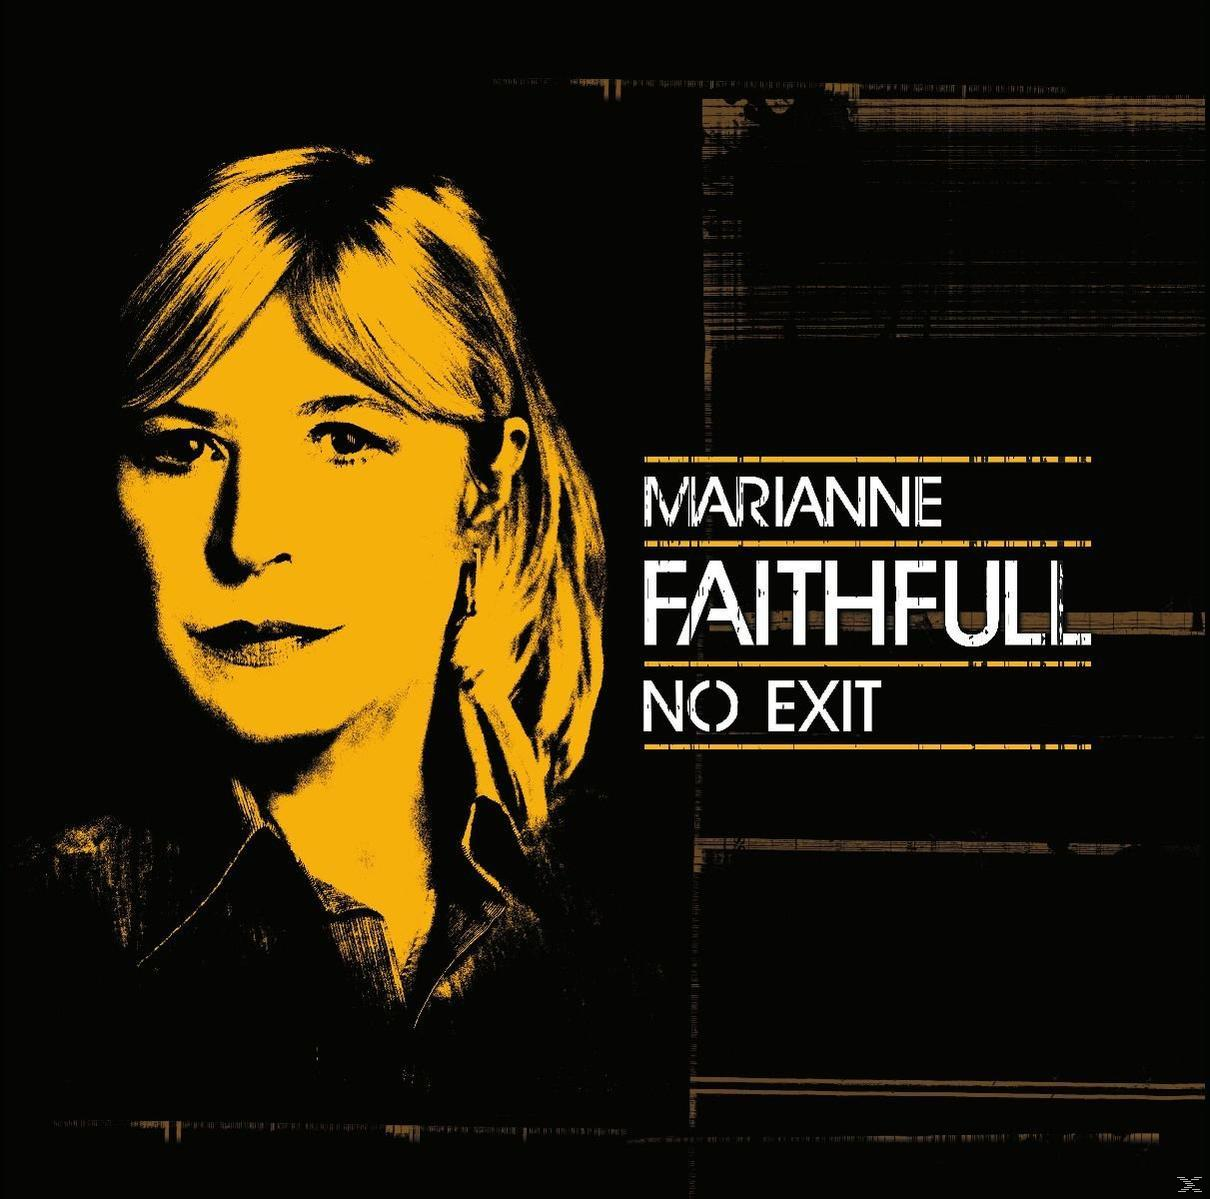 No - Faithfull - Exit Marianne (Vinyl)